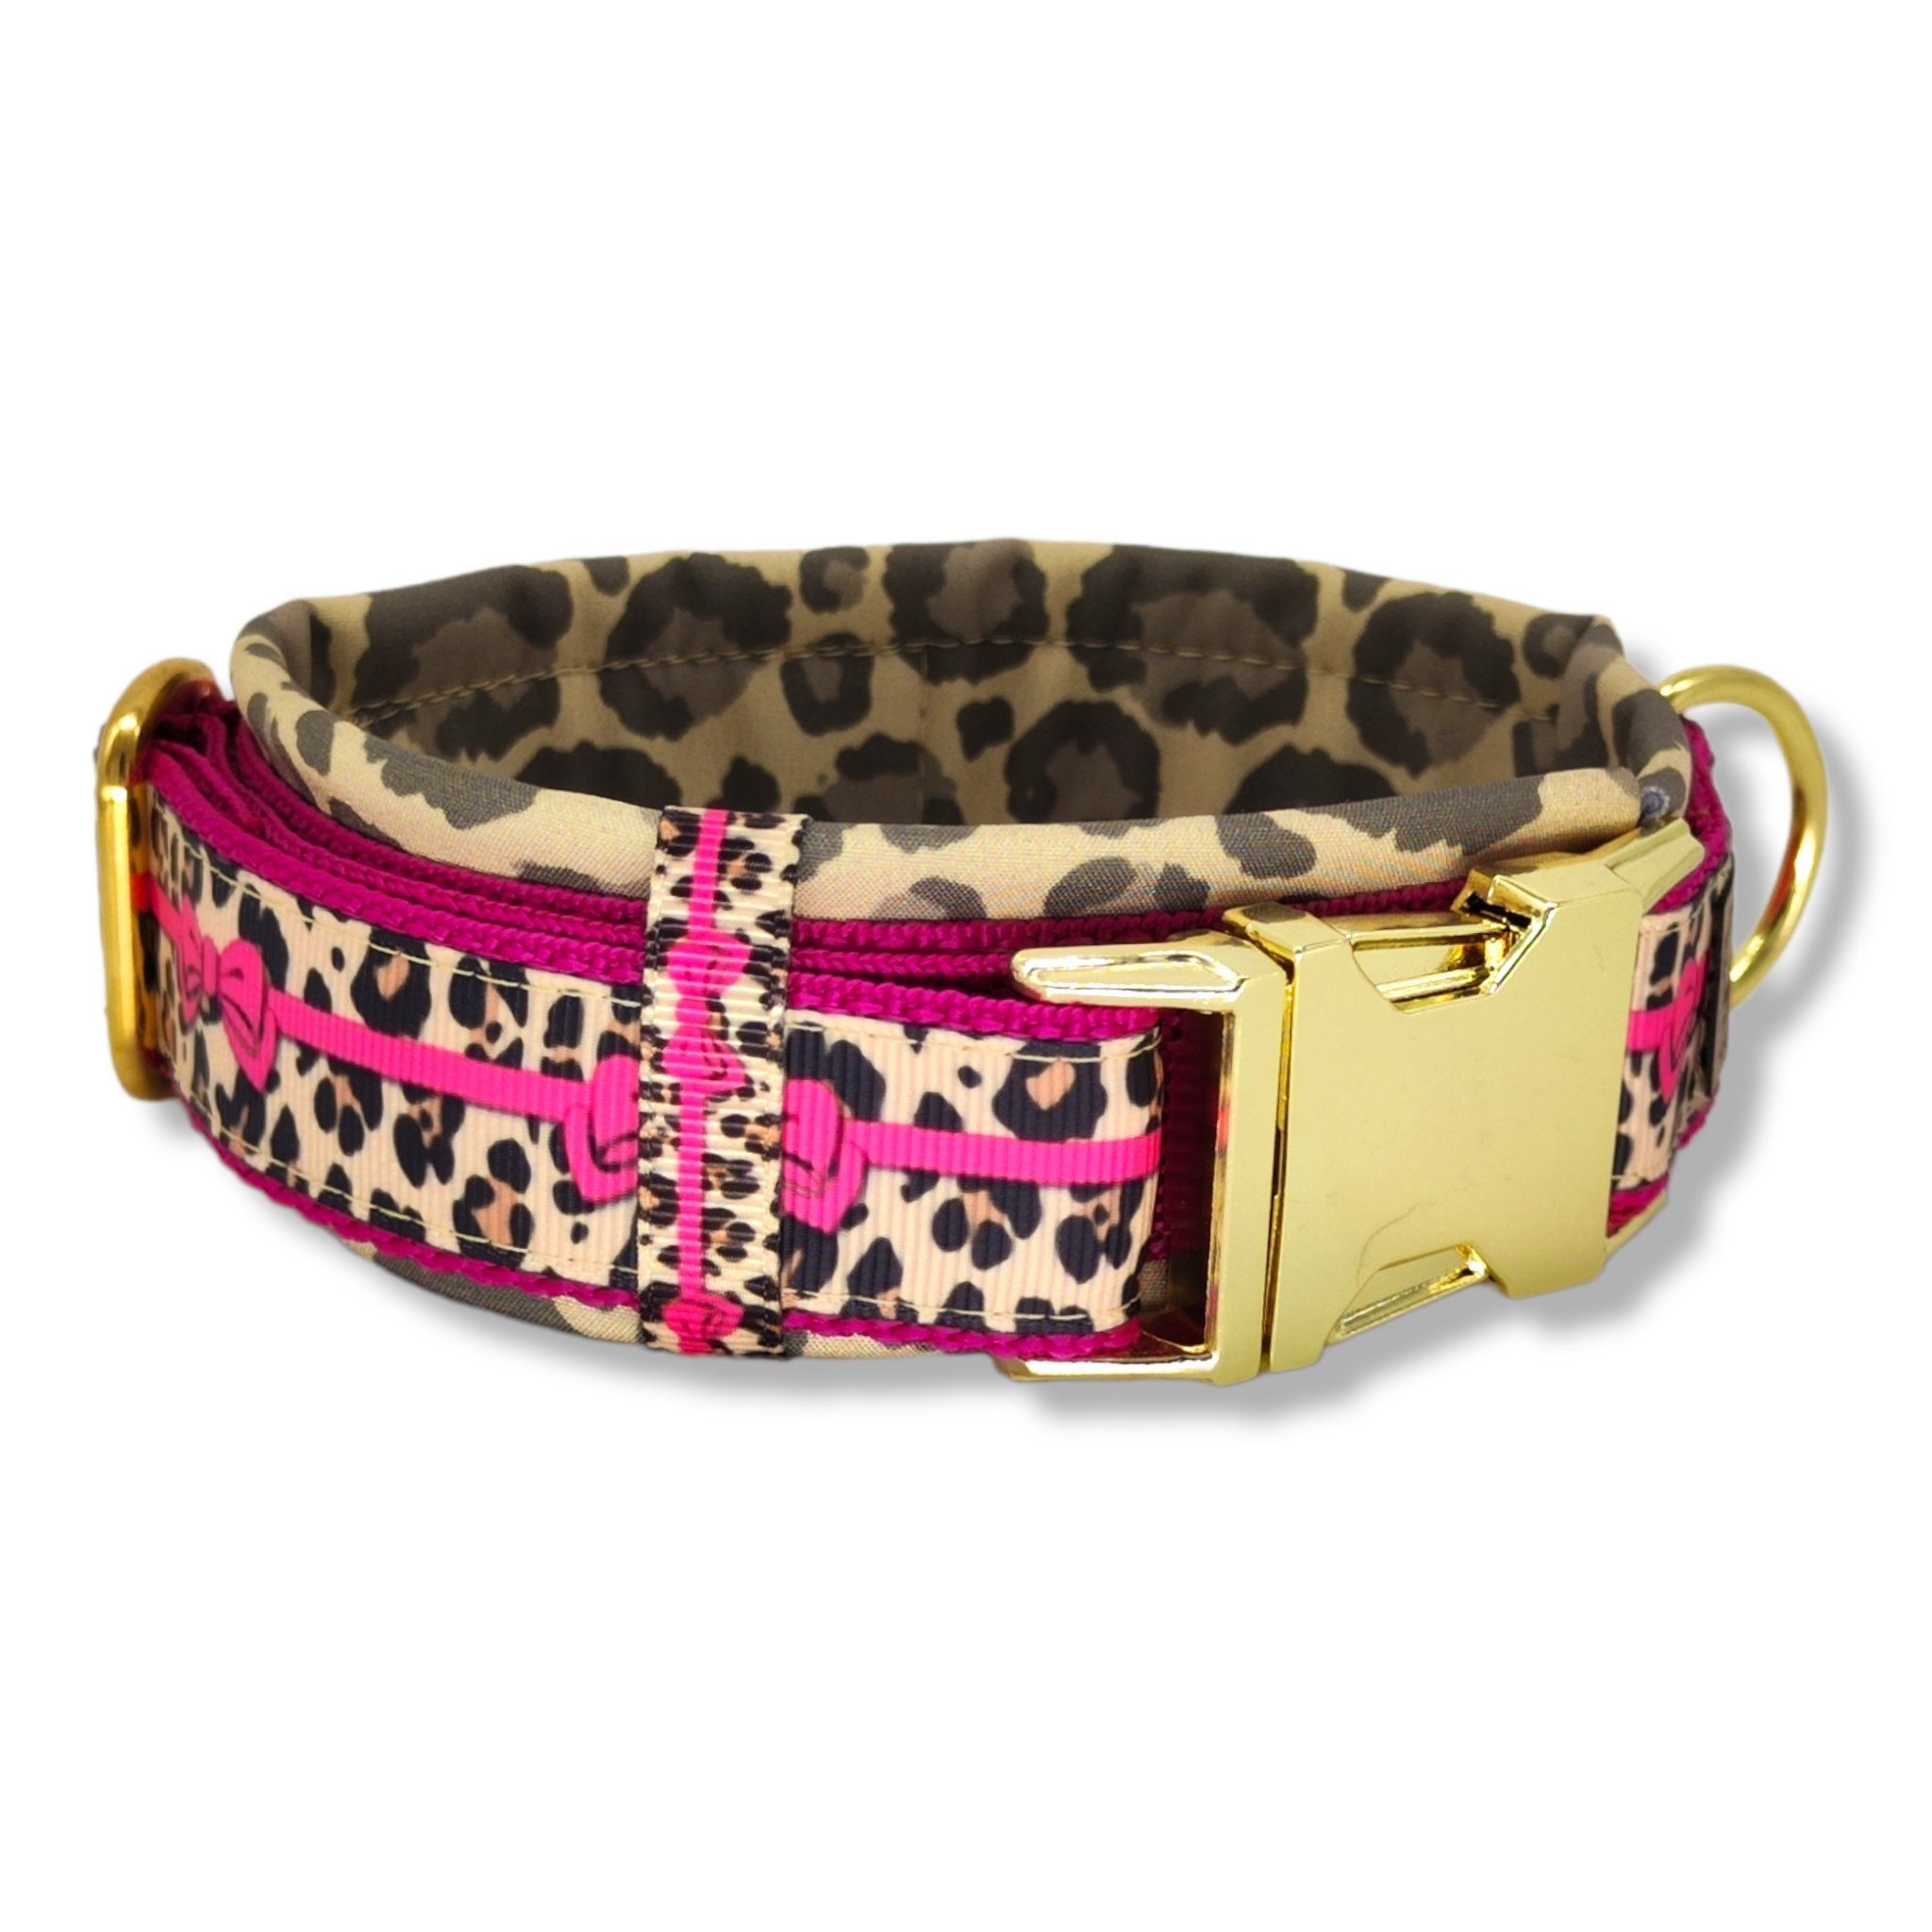 D by E Couture Hunde-Halsband "Pink Leo Love V", gepolstert, verstellbar, 30mm breit, Handmade